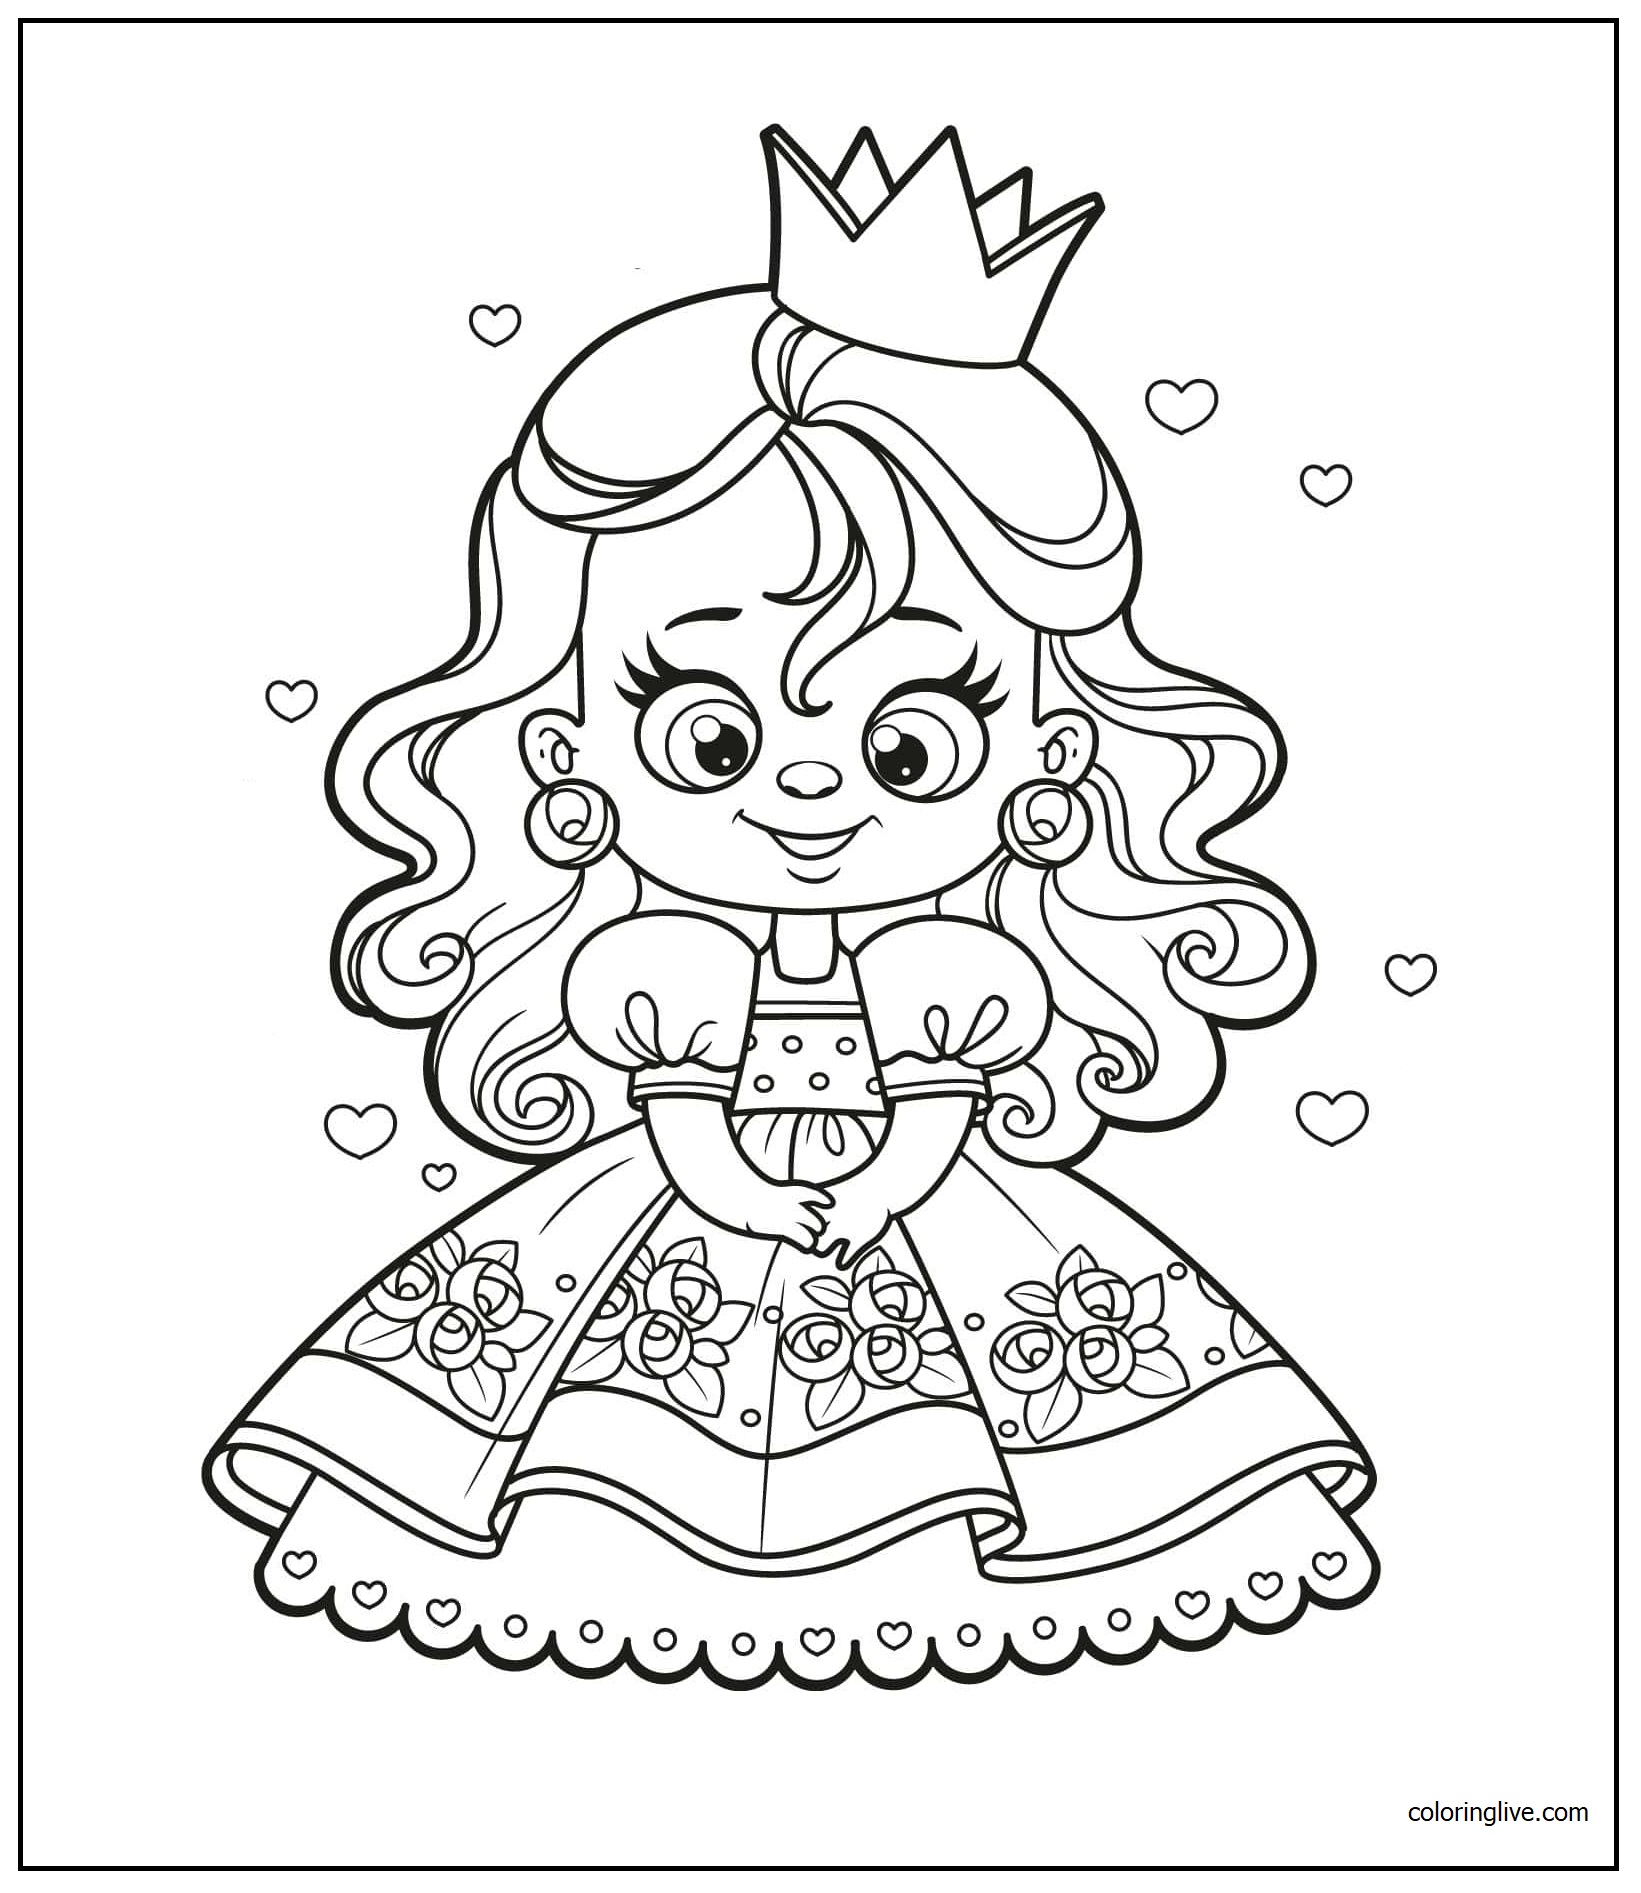 Printable Baby Princess  sheet Coloring Page for kids.